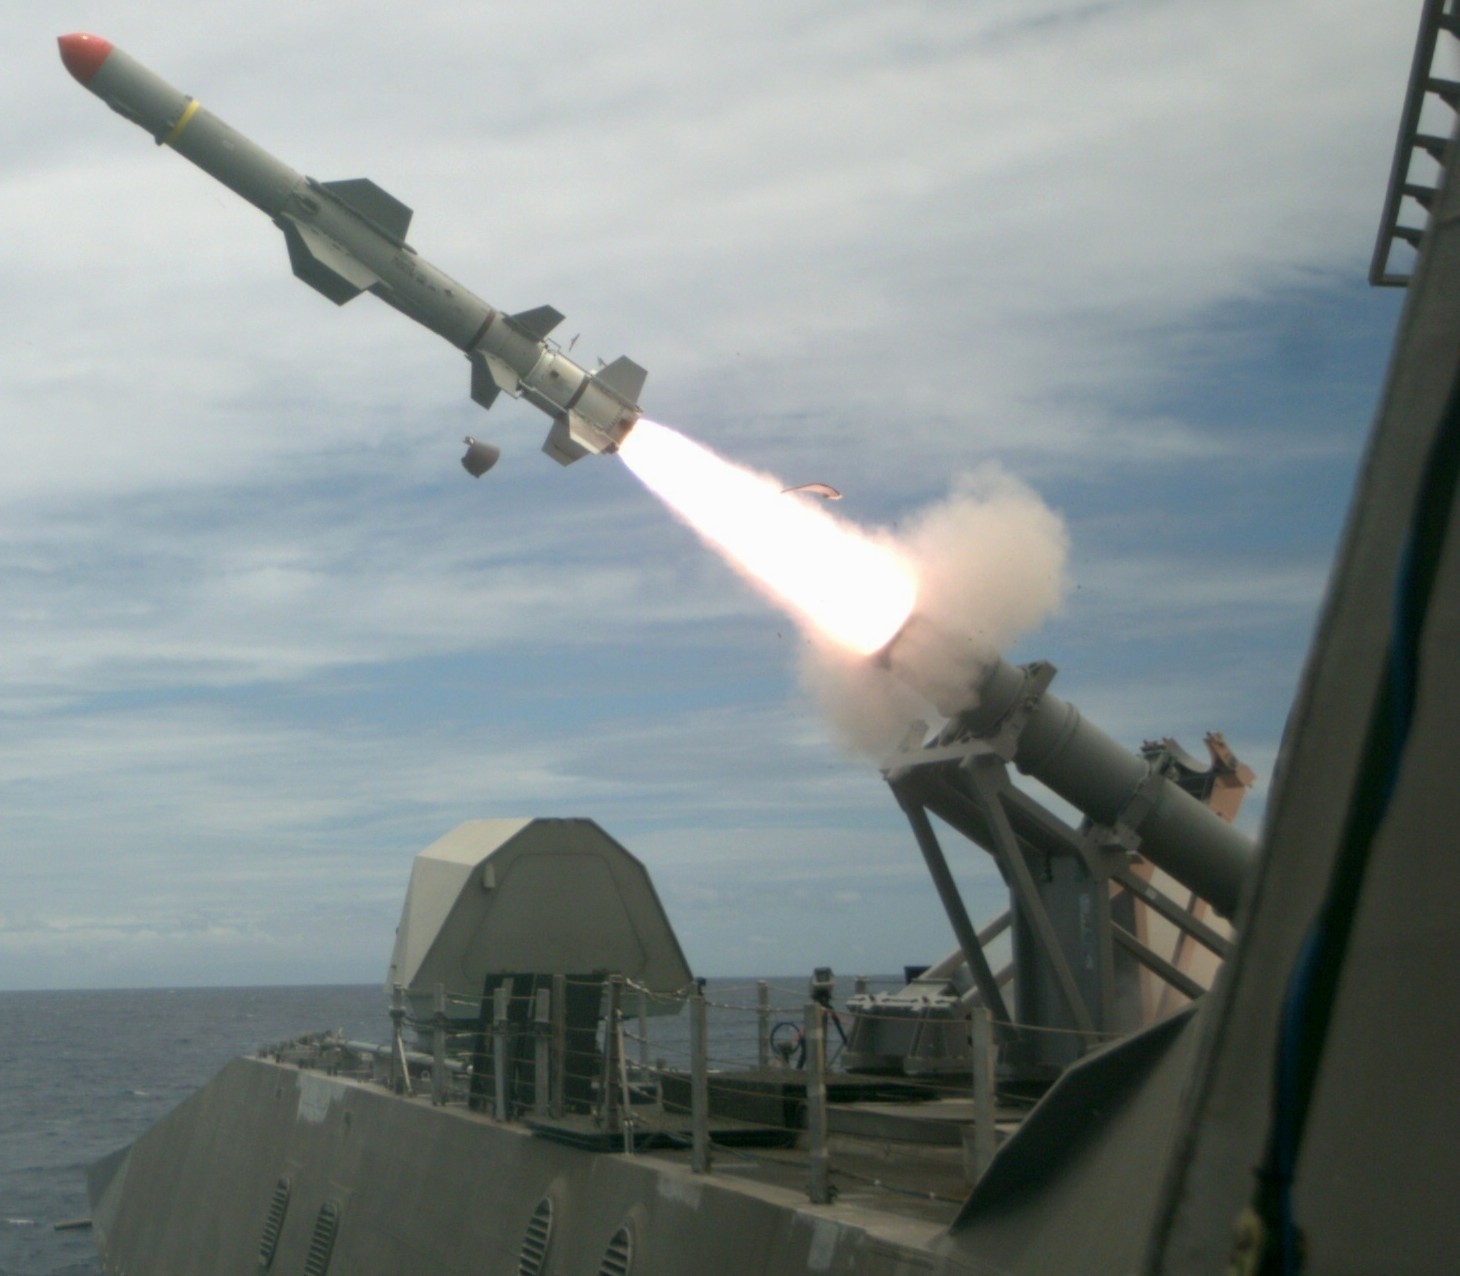 lcs-4 uss coronado independence class littoral combat ship us navy 07 harpoon ssm missile